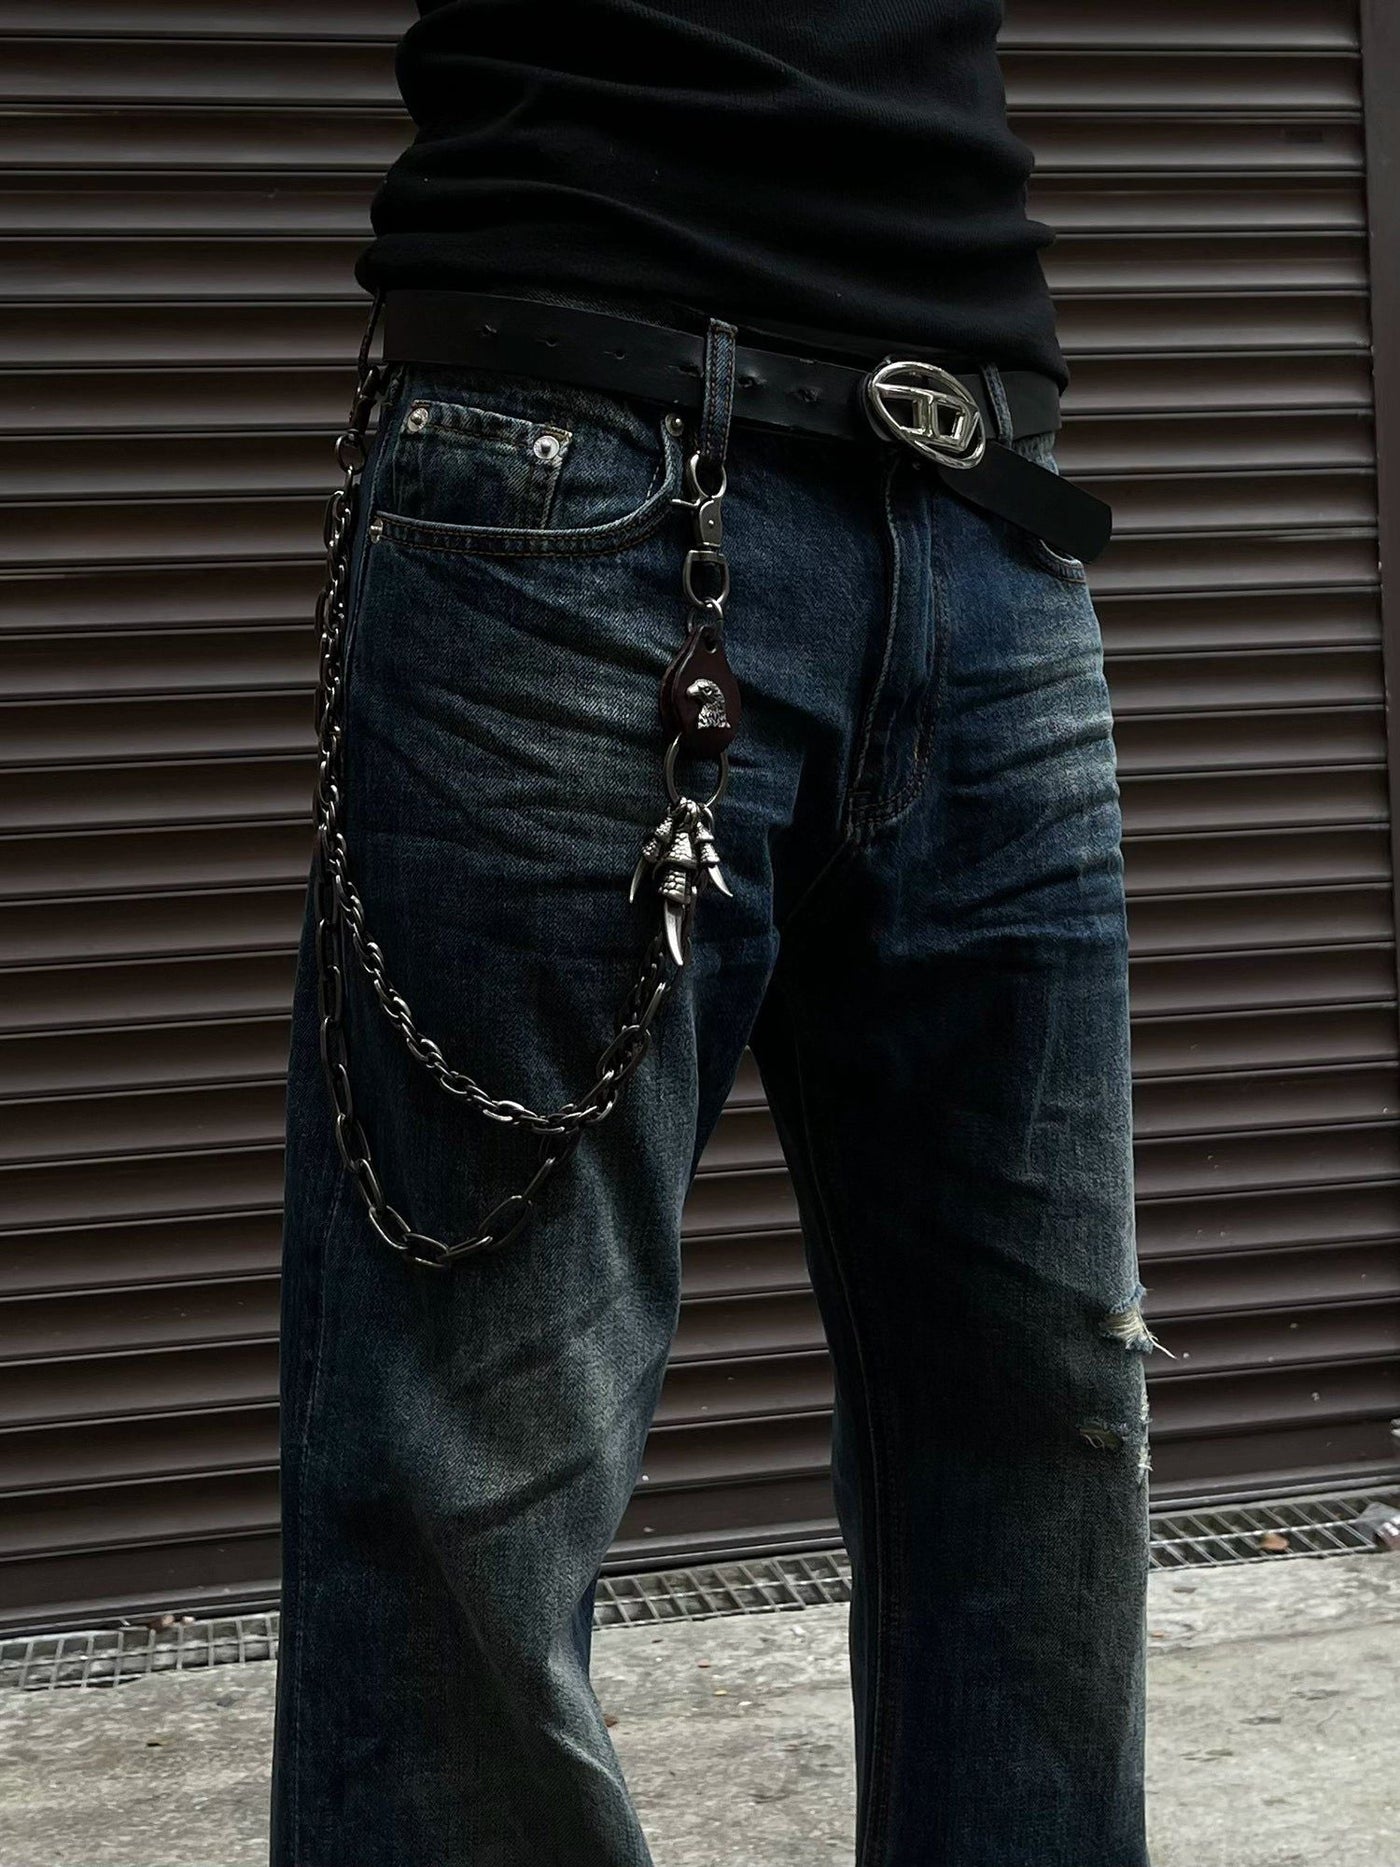 Spliced Blades Track Pants Korean Street Fashion Pants By MaxDstr Shop Online at OH Vault